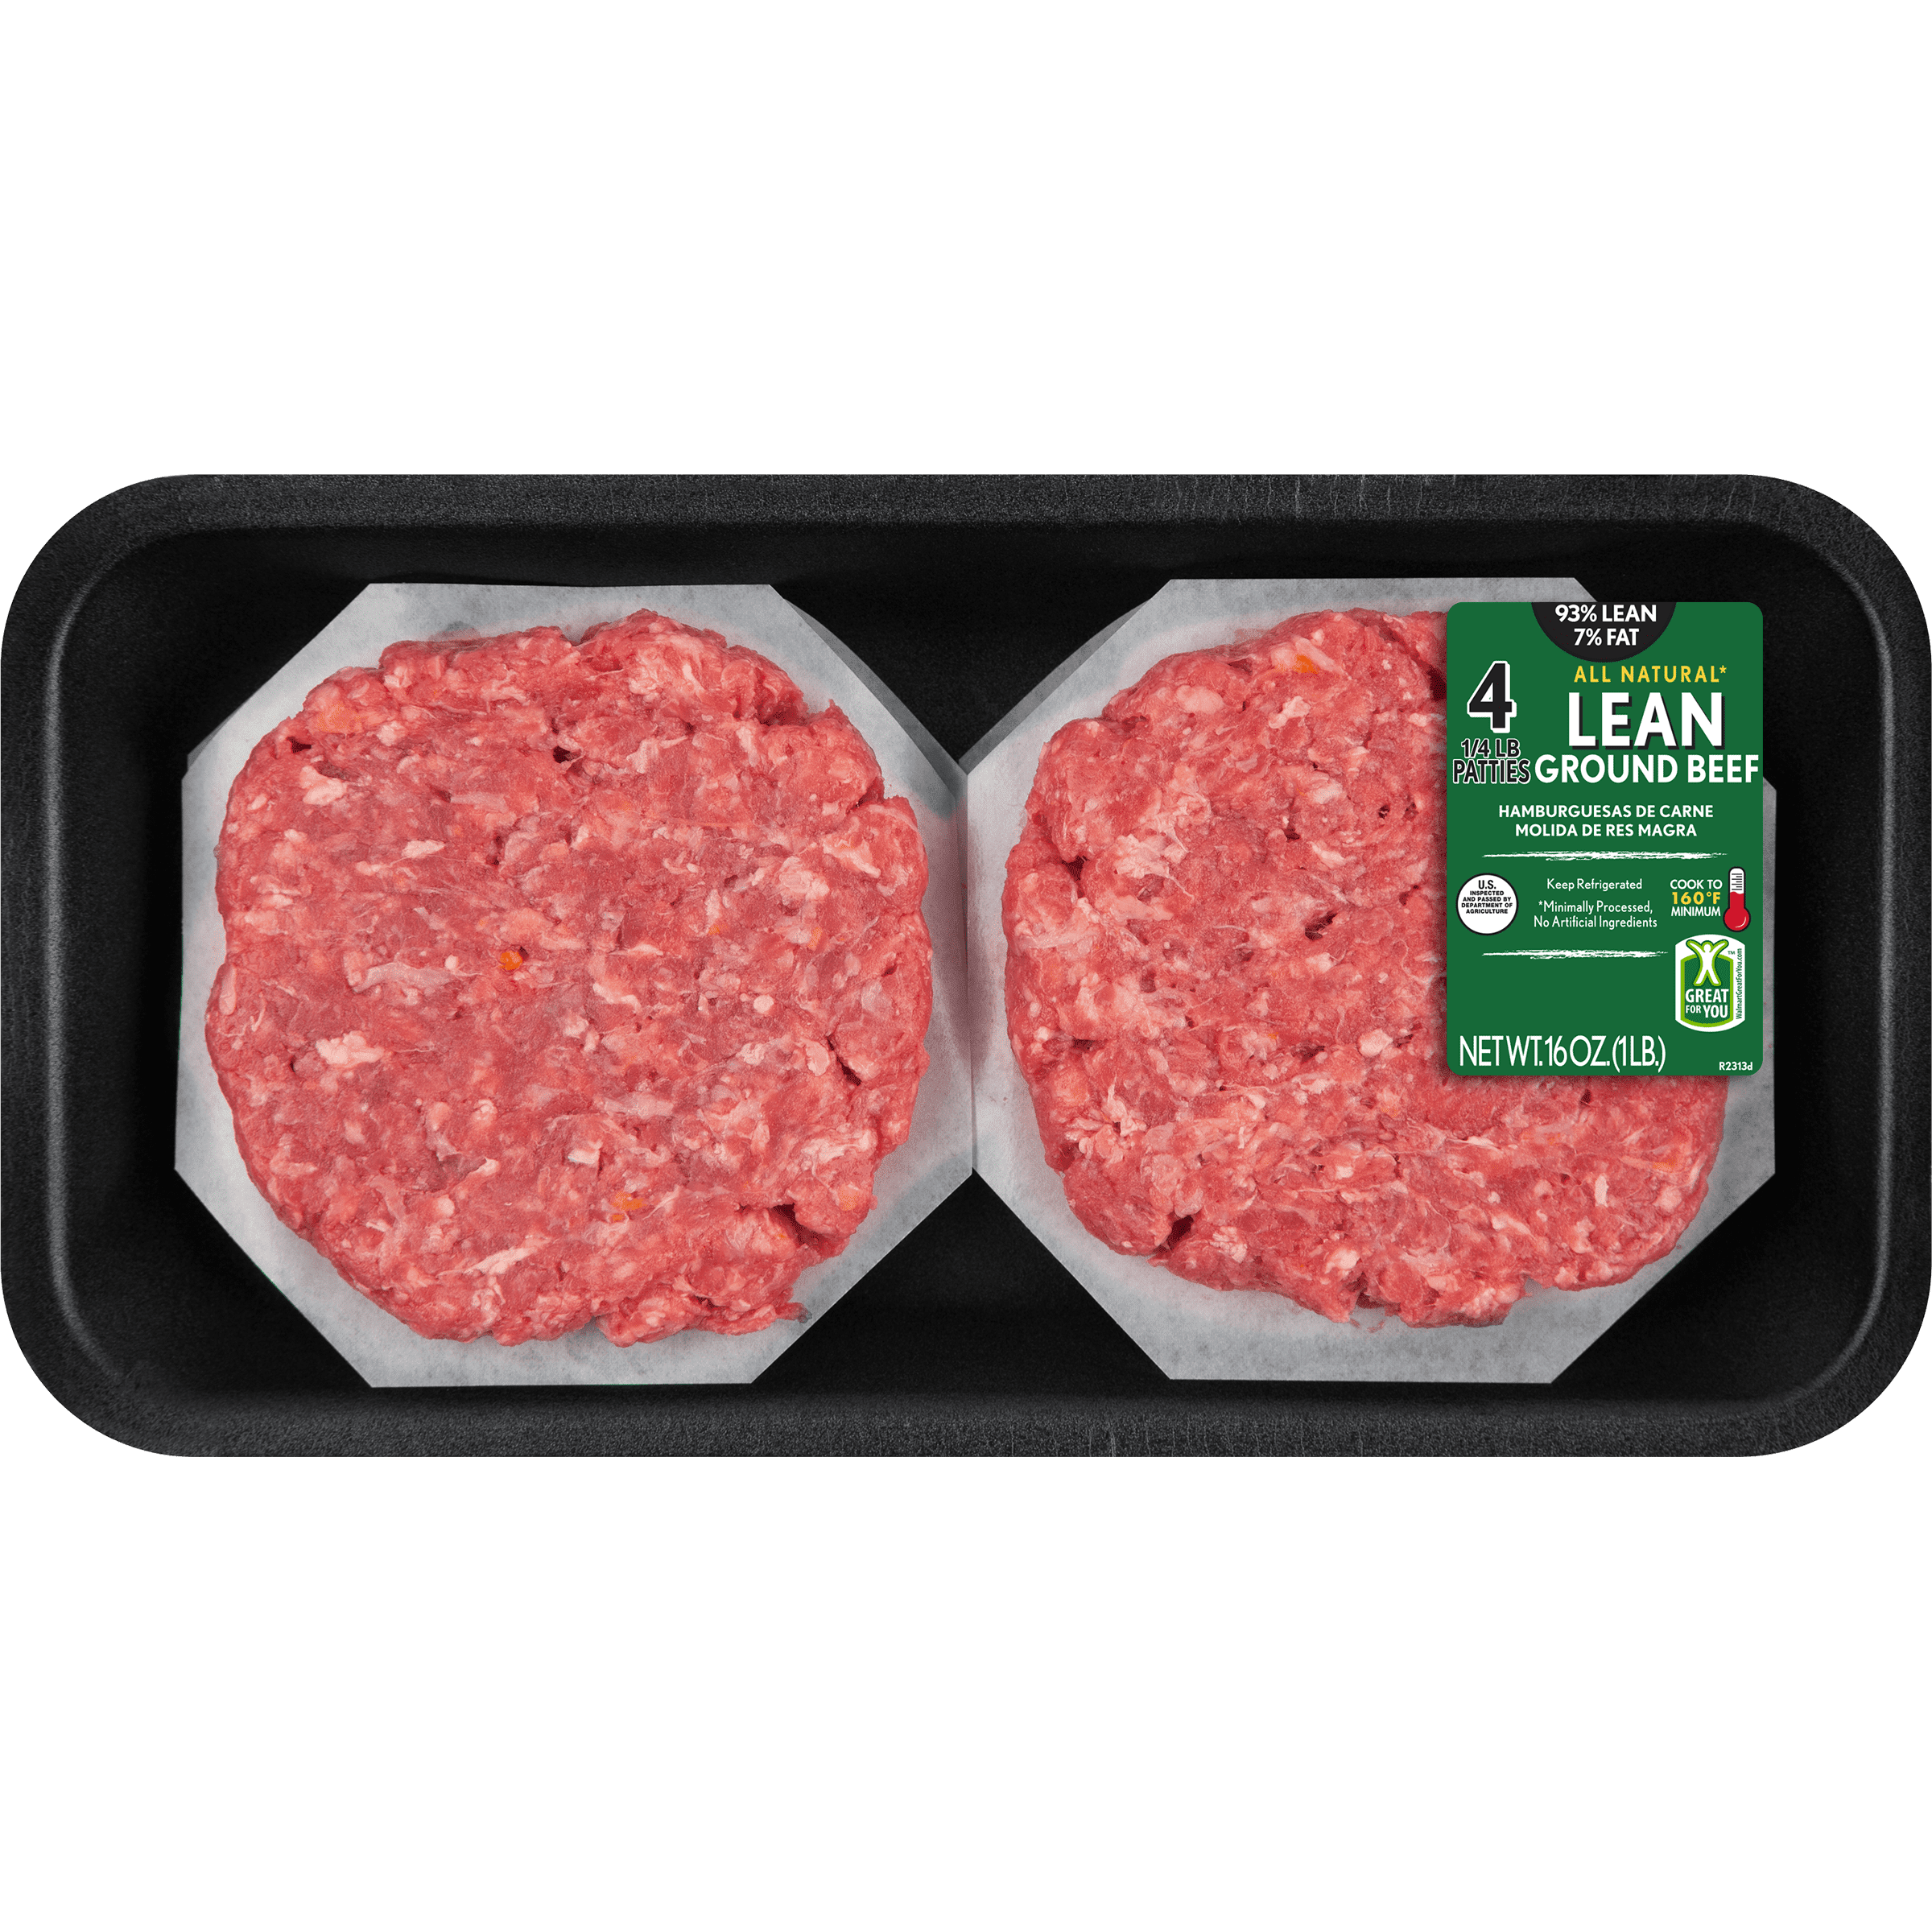 All Natural Lean Fat Ground Beef Patties Count Lb Walmart Walmart